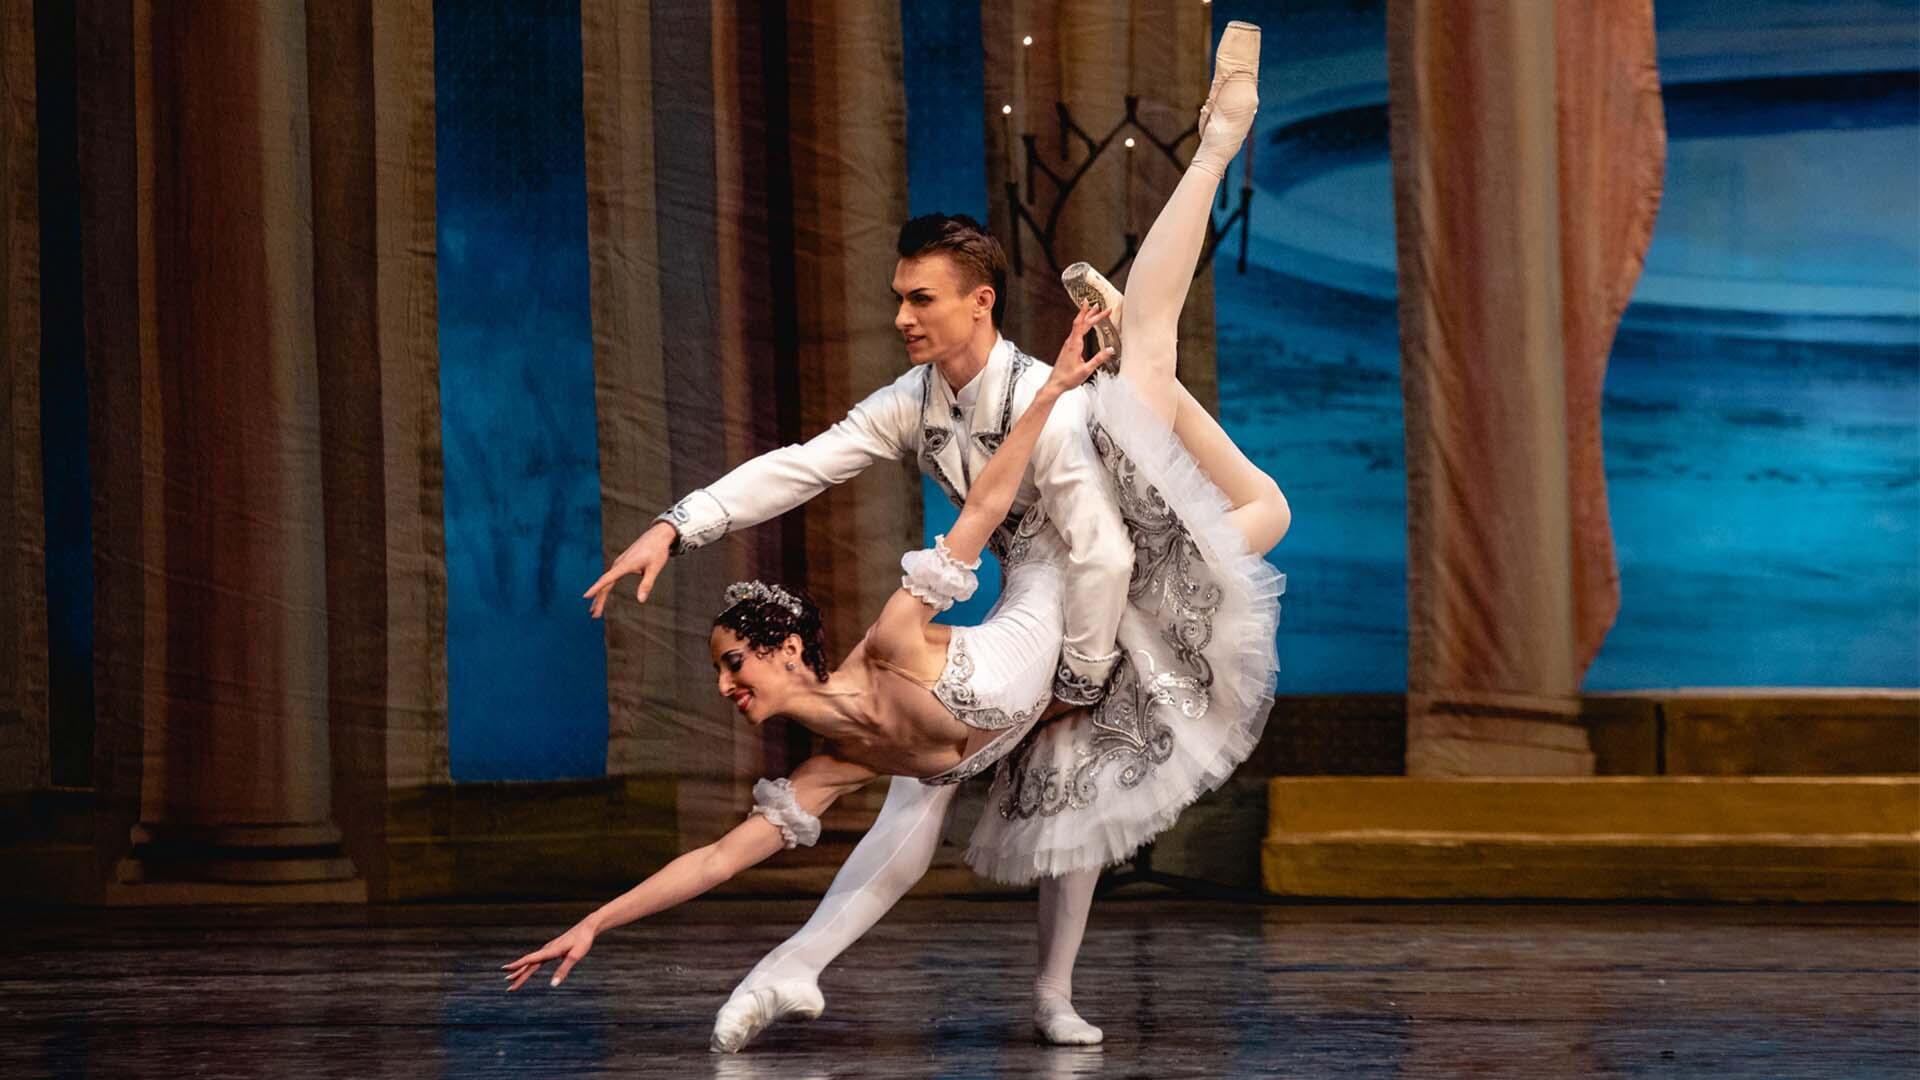 The Ukrainian Ballet of Peace